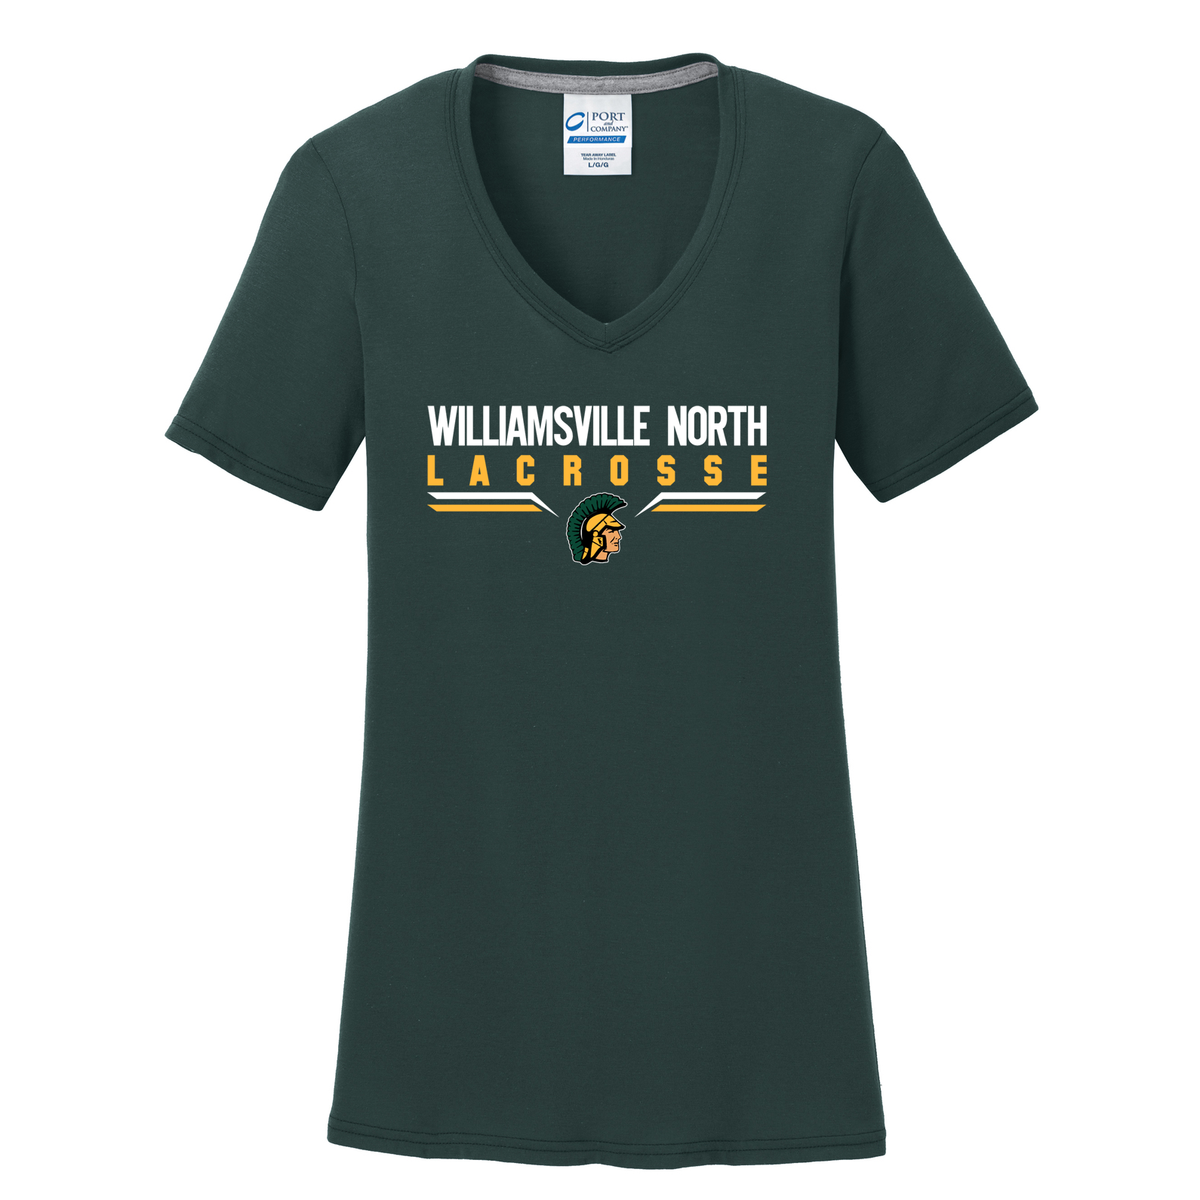 Williamsville North Lacrosse Women's T-Shirt